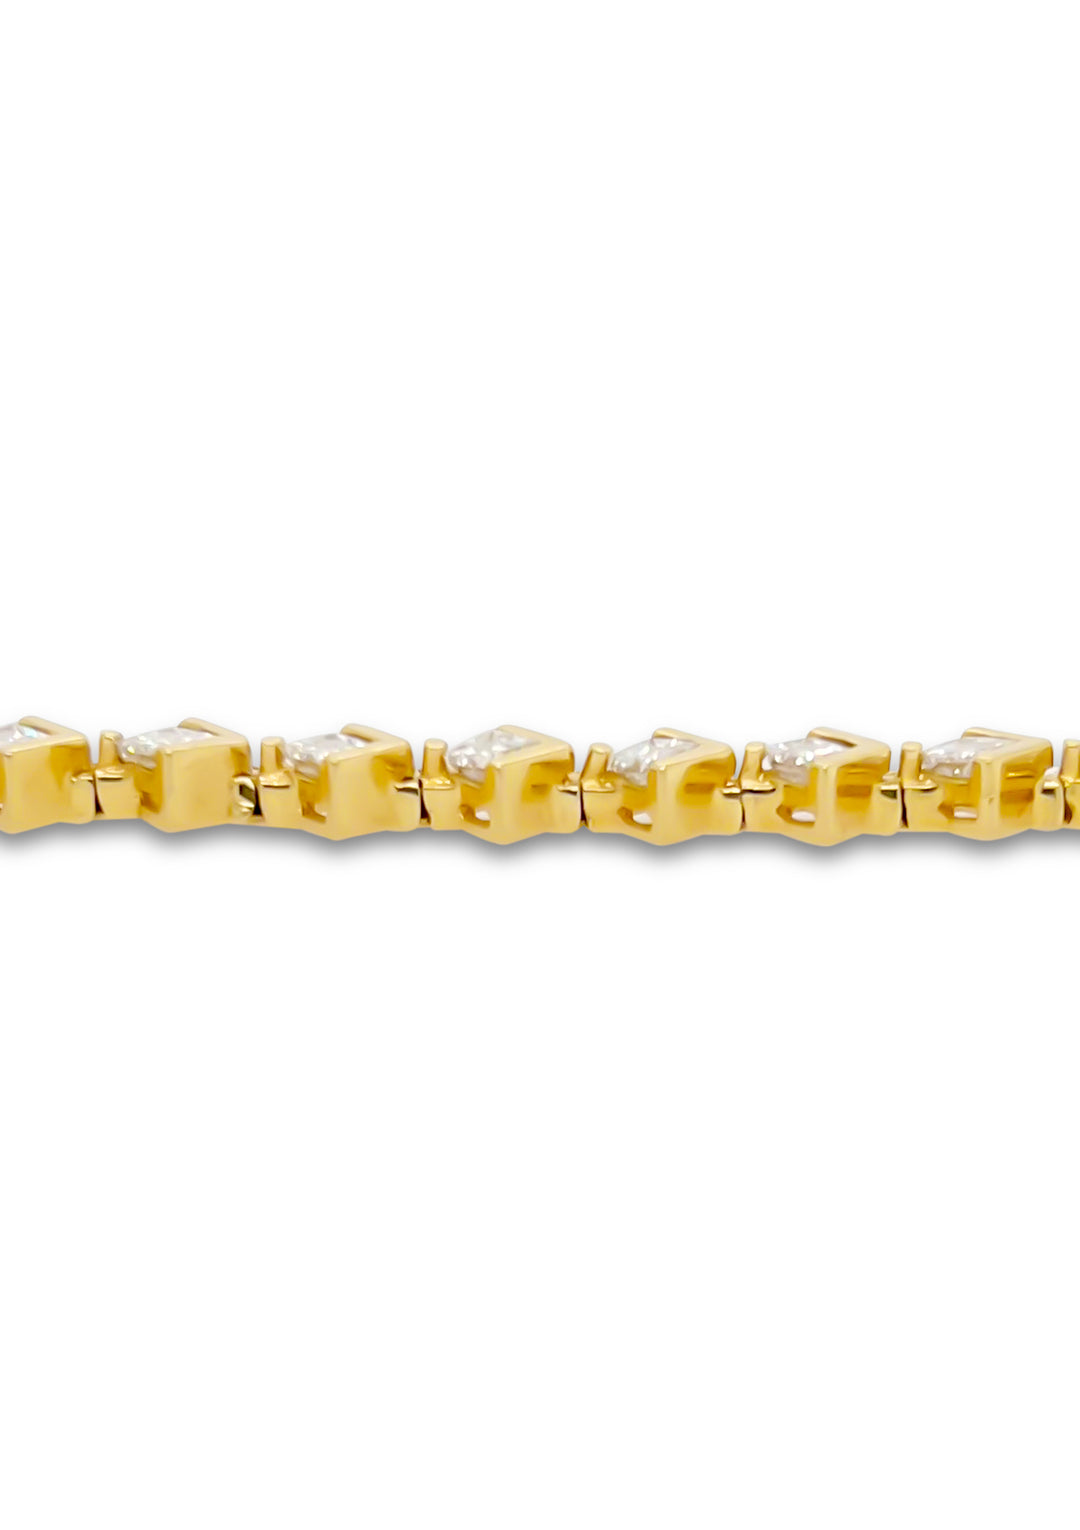 14K Yellow Gold 4.28 Carat Princess Cut Diamond Tennis Bracelet